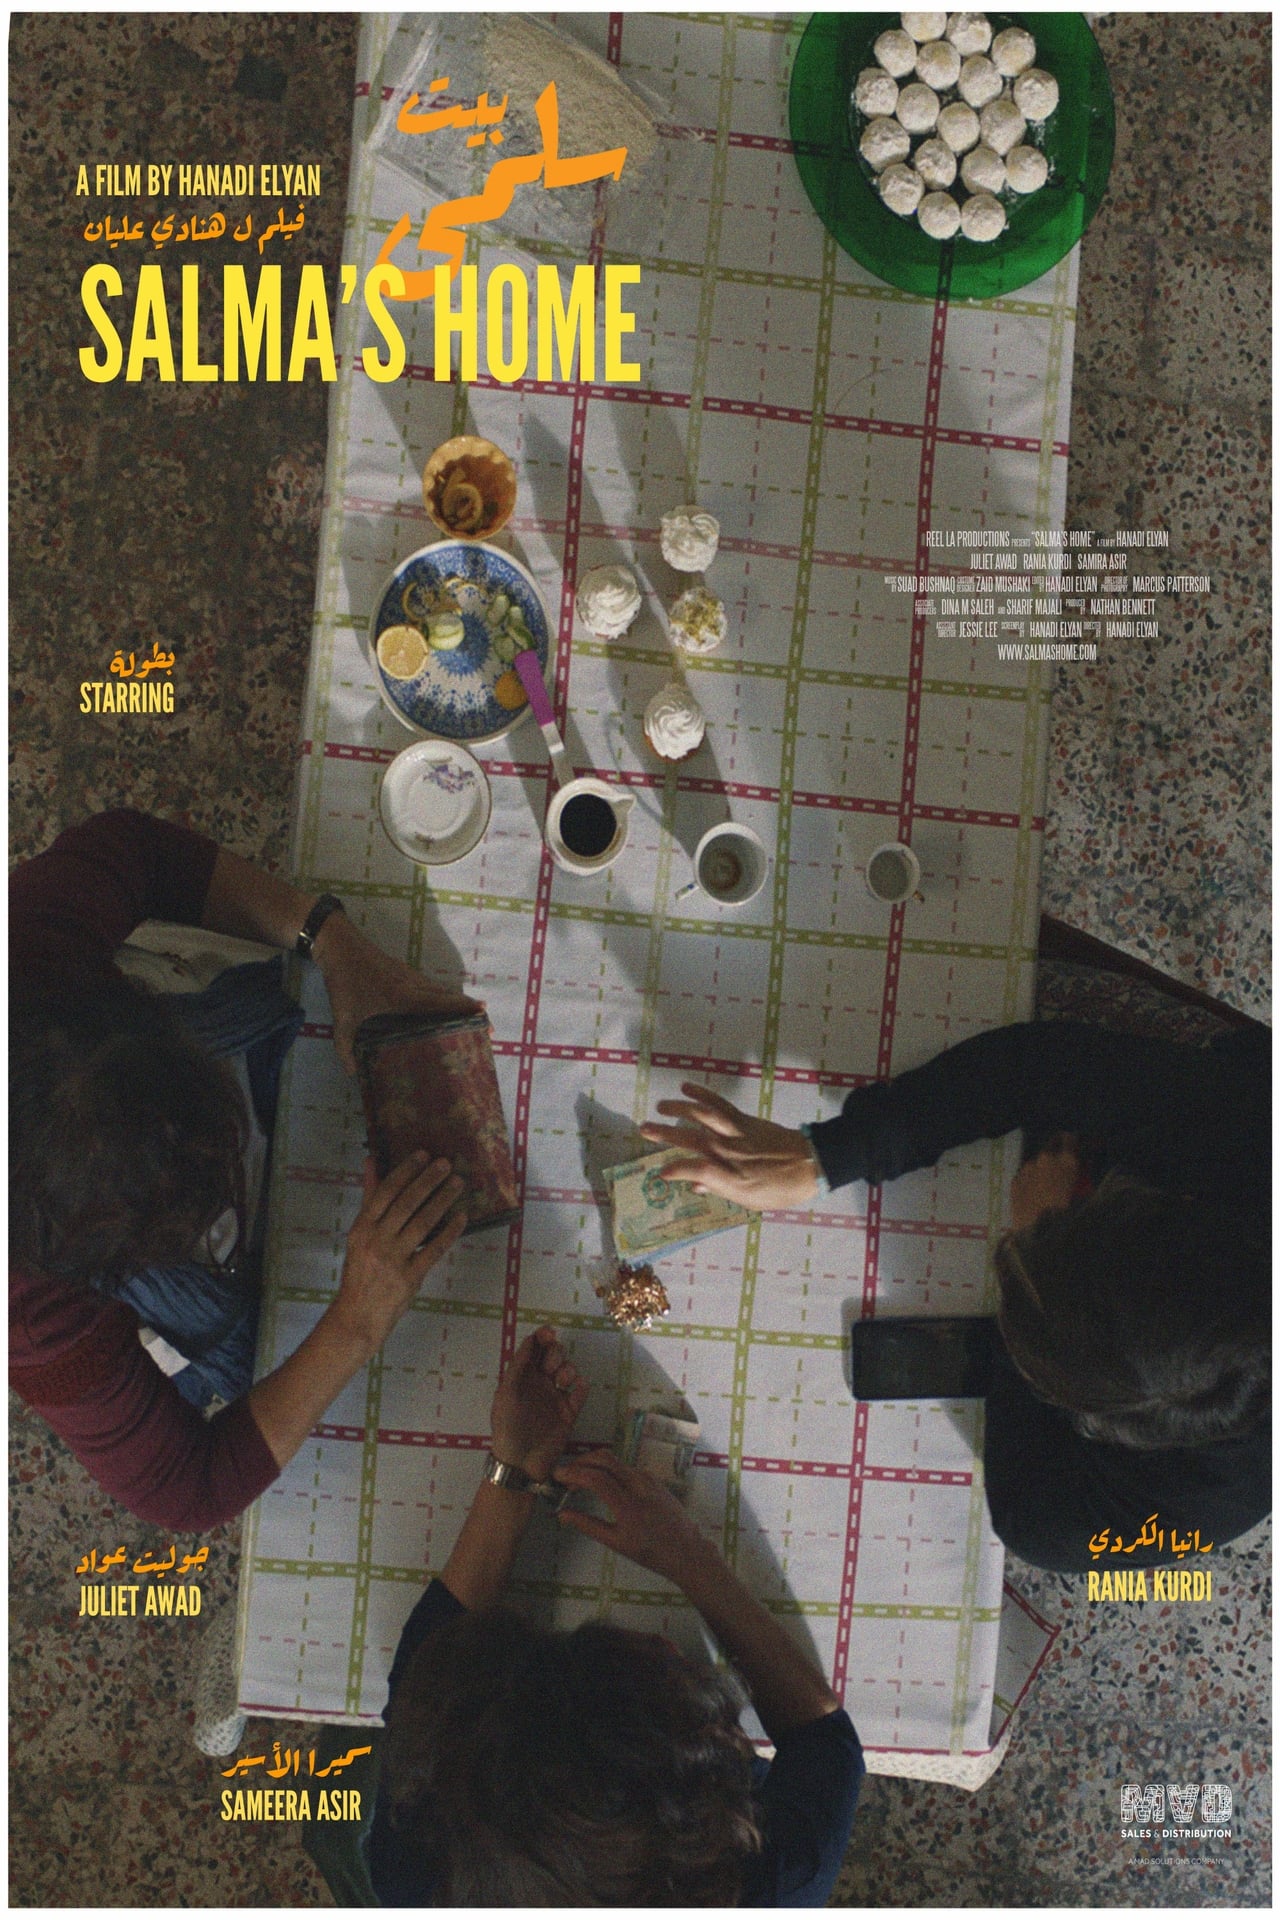 Salma's Home